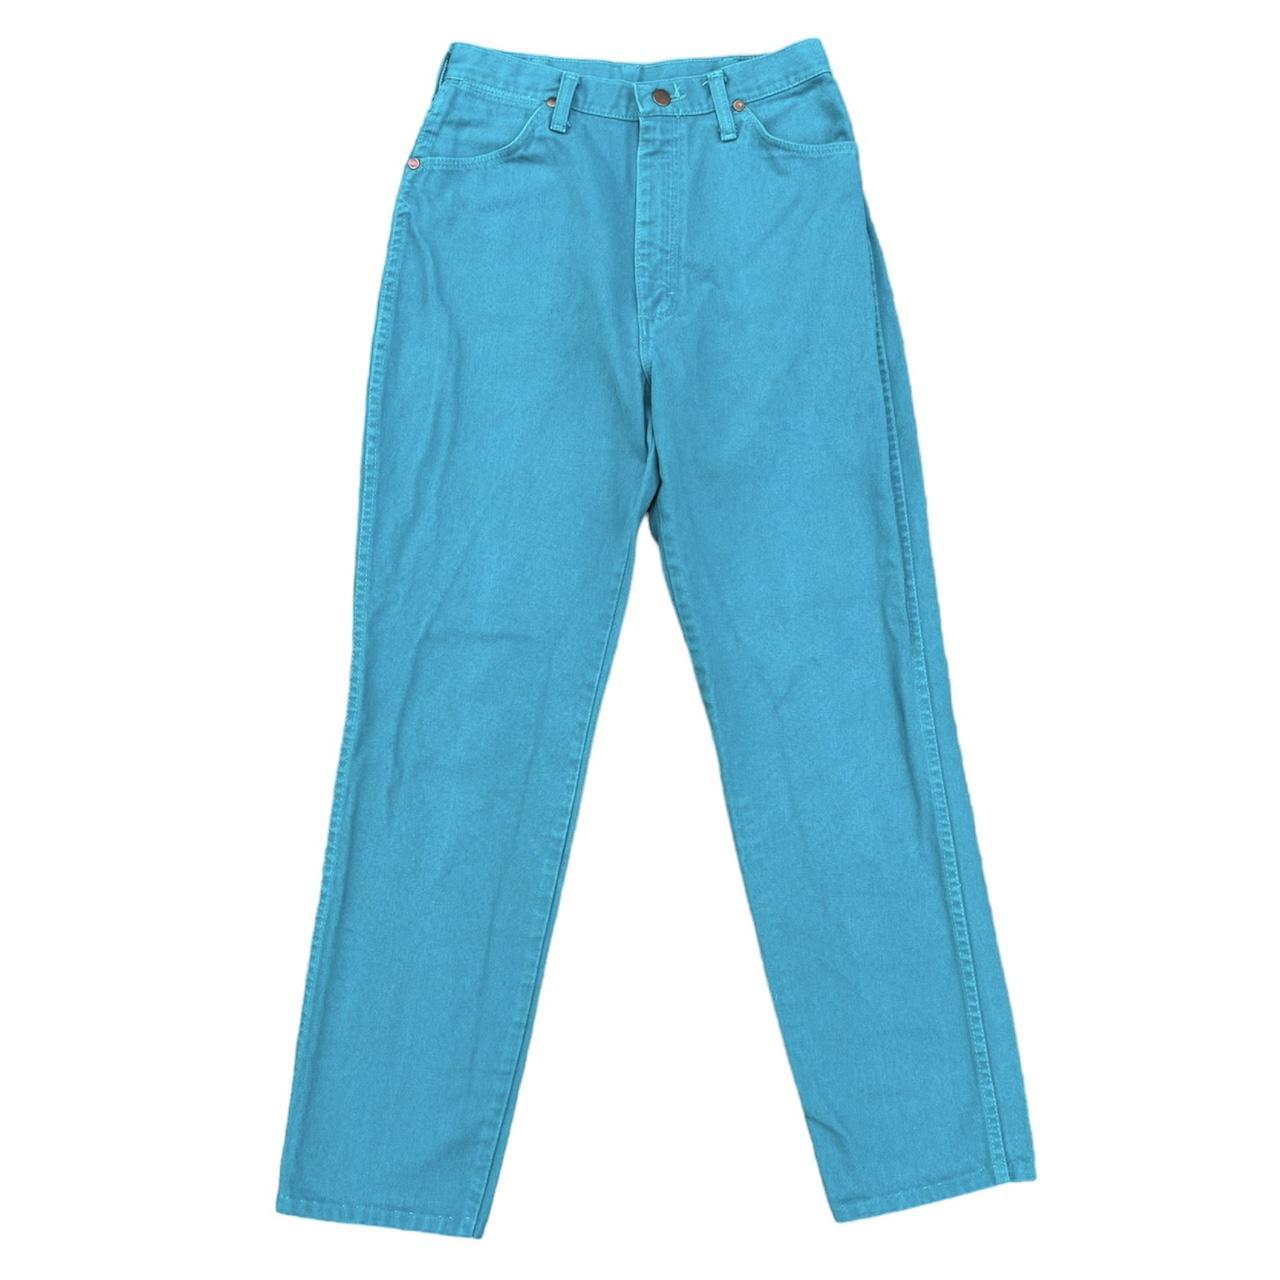 Wrangler Women's Blue and Green Jeans | Depop